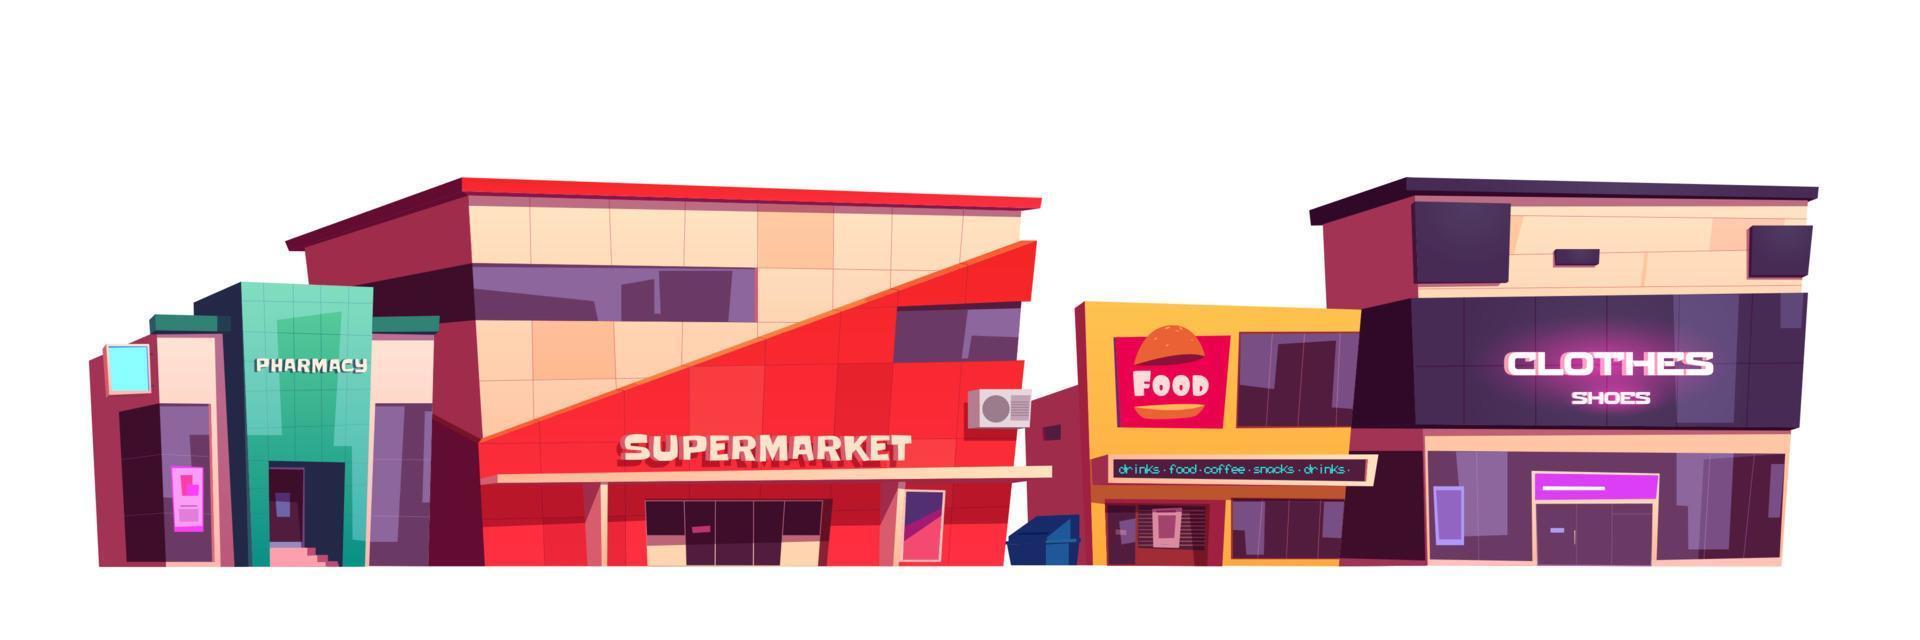 Ladengebäude, Bekleidungsgeschäft, Supermarktfassaden vektor